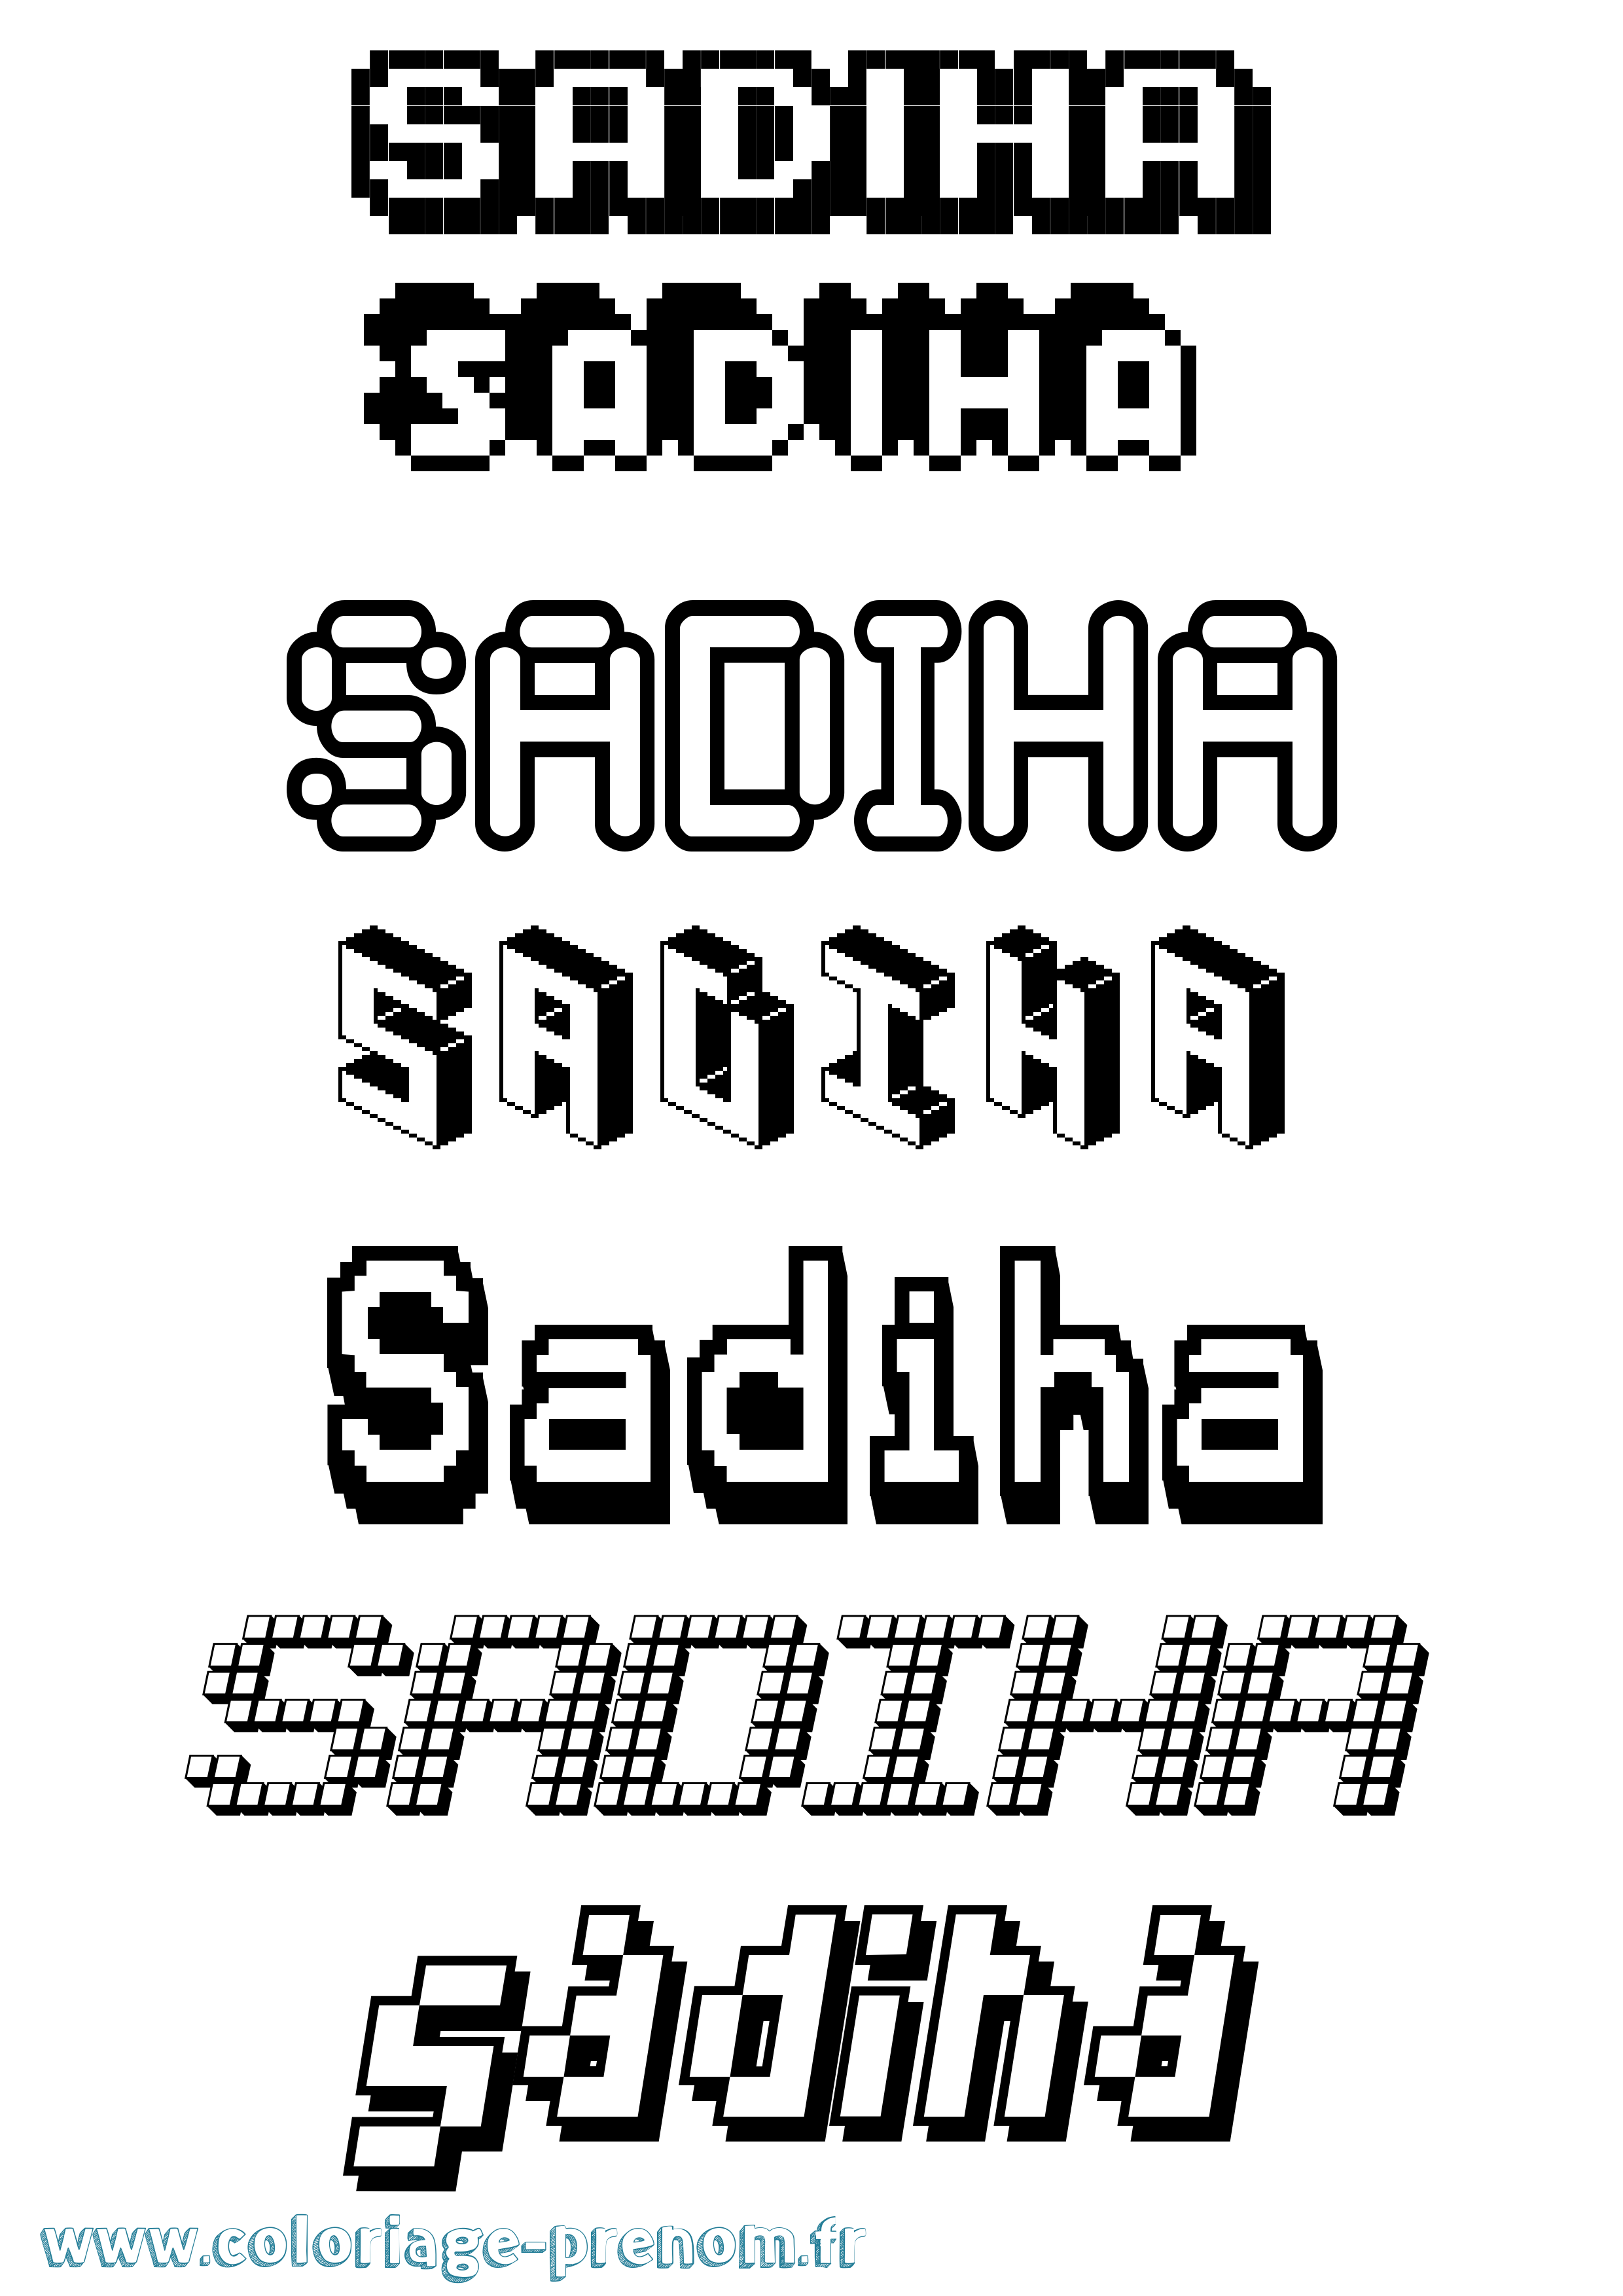 Coloriage prénom Sadiha Pixel